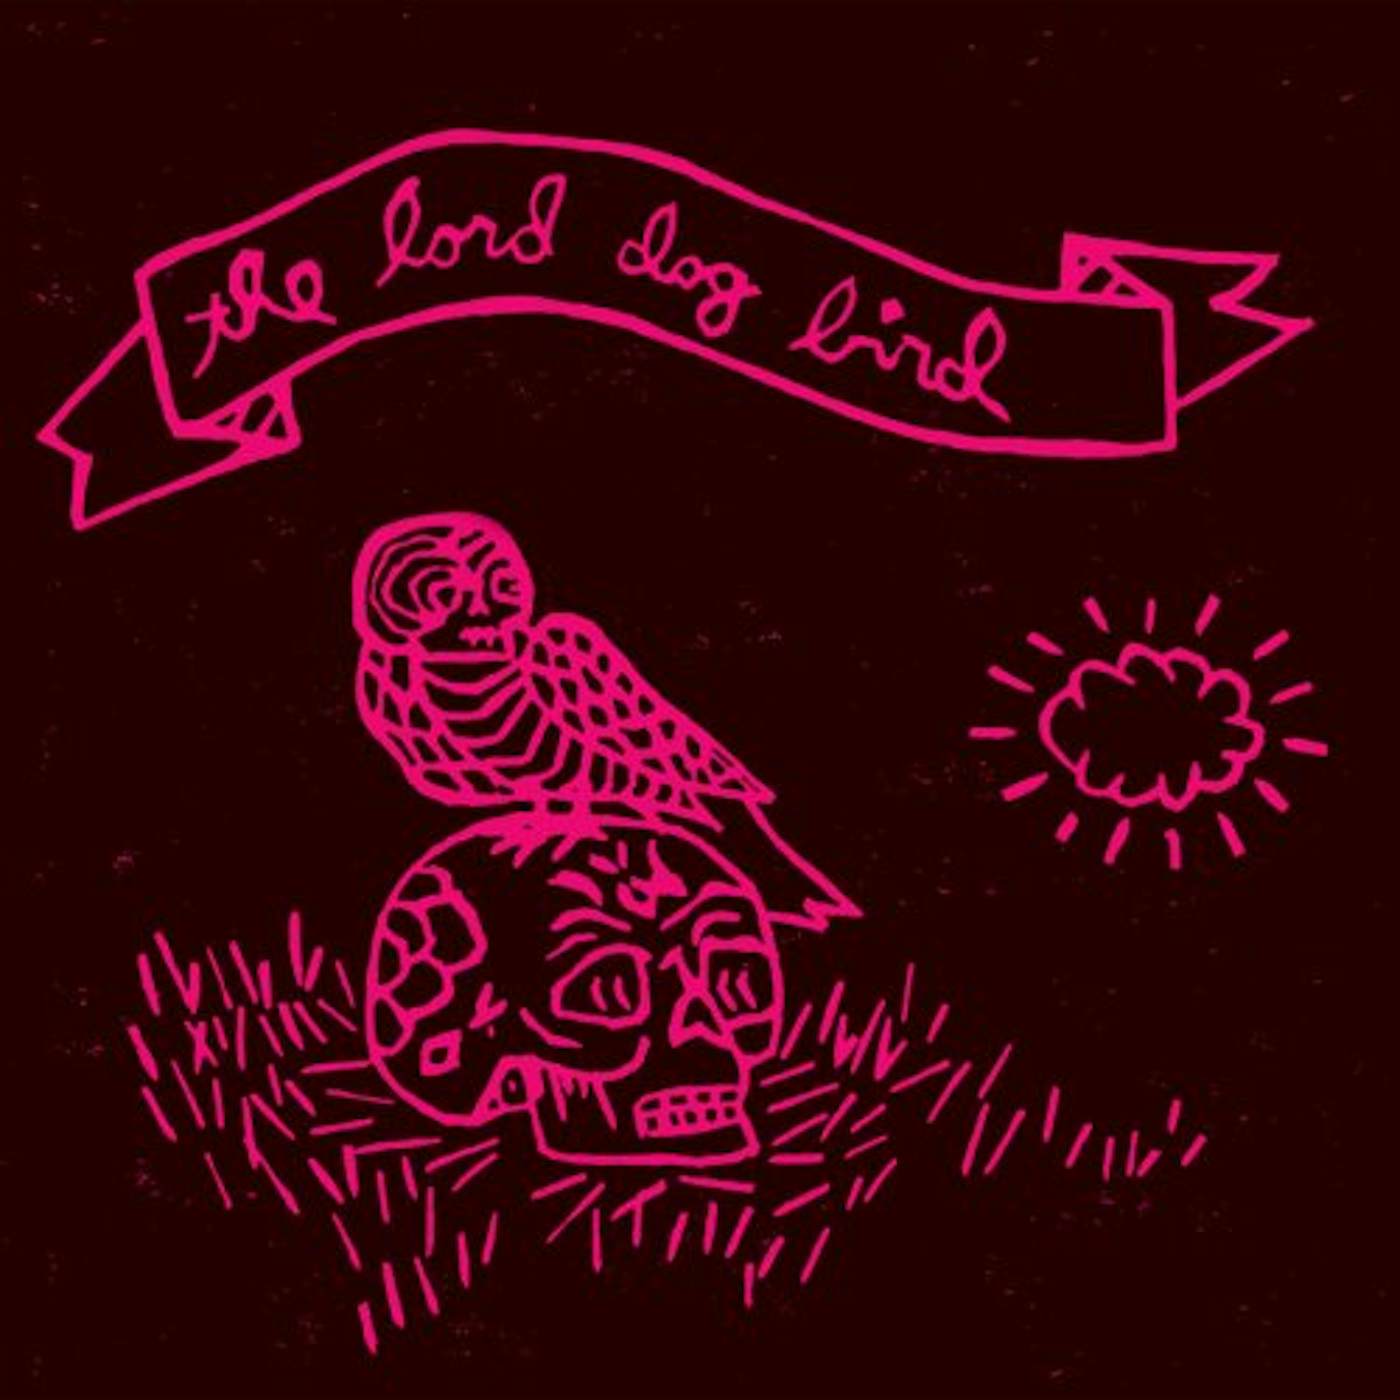 The Lord Dog Bird CD